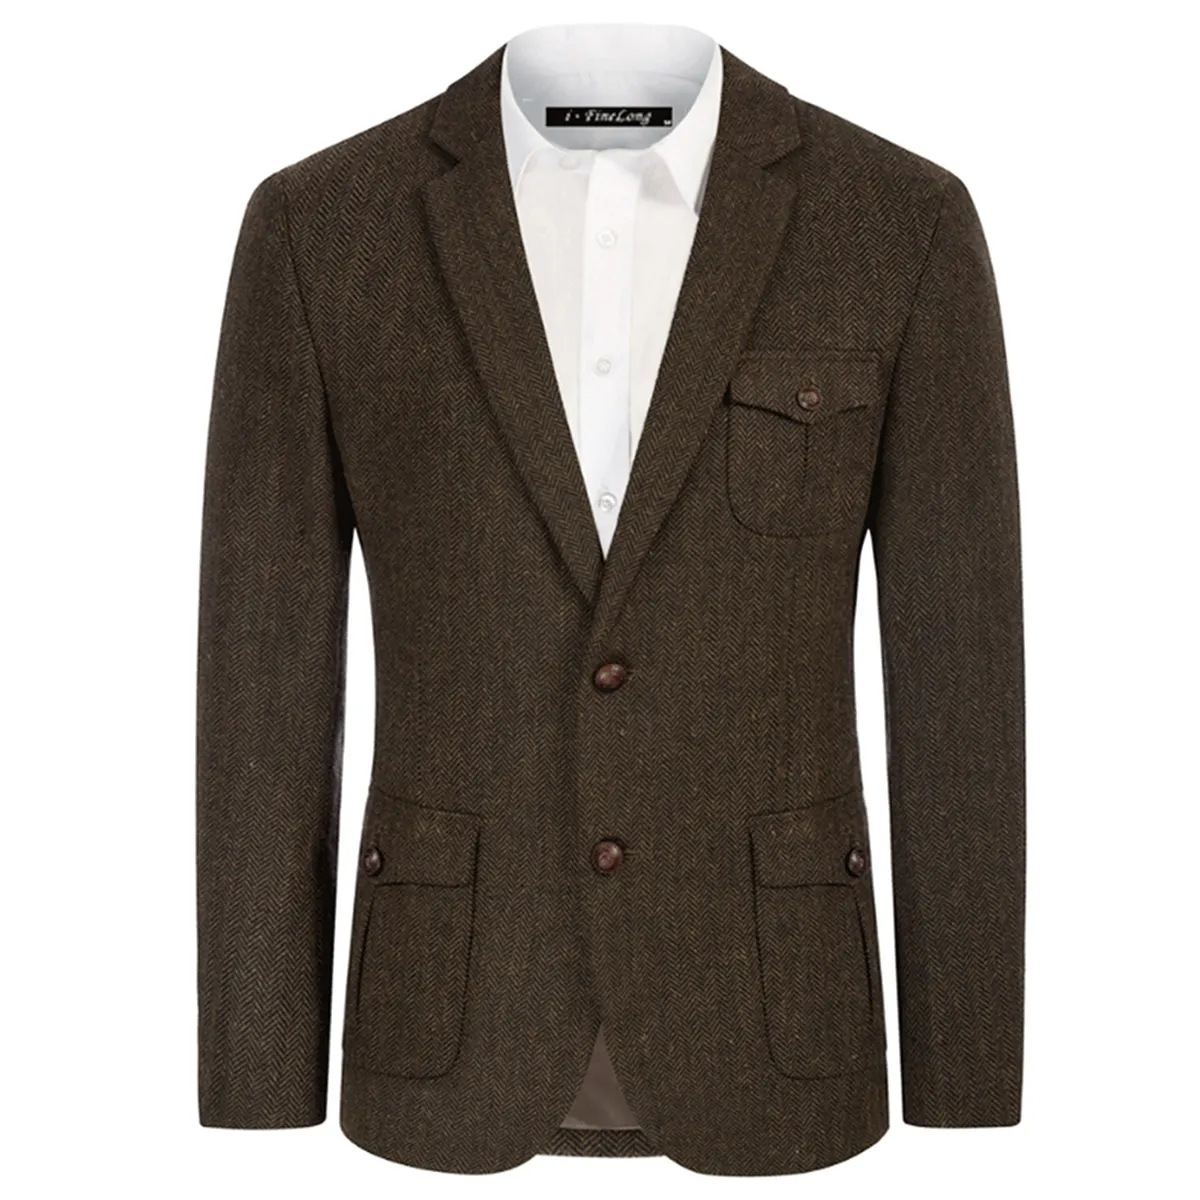 Men's Plaid Slim Fit Blazer Jackets Suit Two Buttons Lightweight Sport Coats Casual Blazer